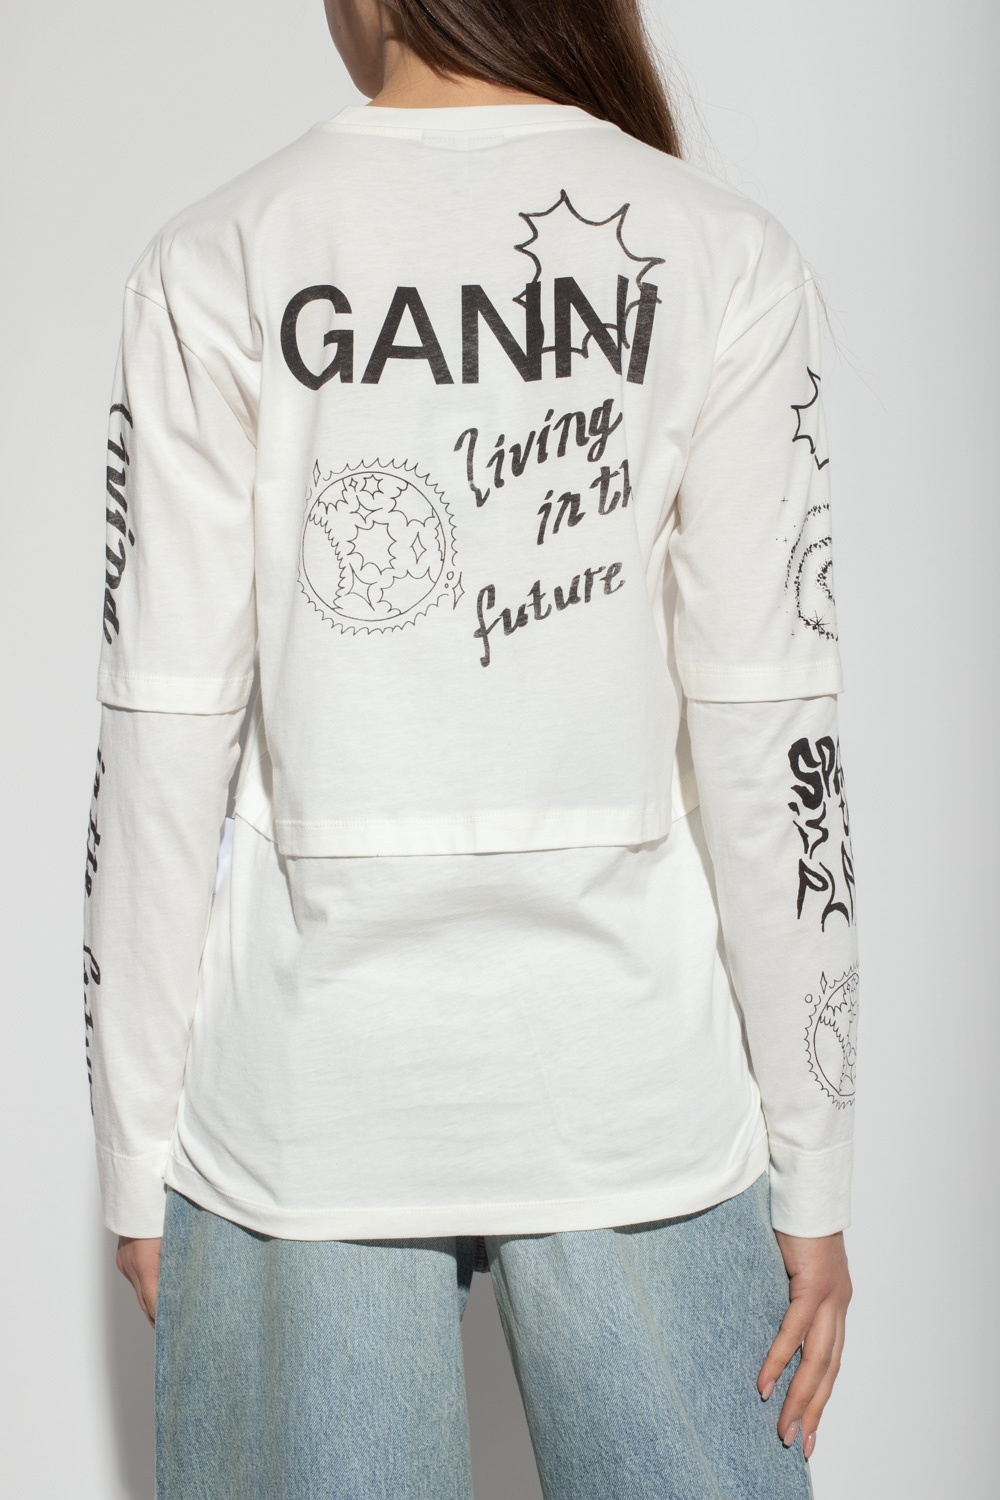 Ganni courreges heart beat print t shirt item